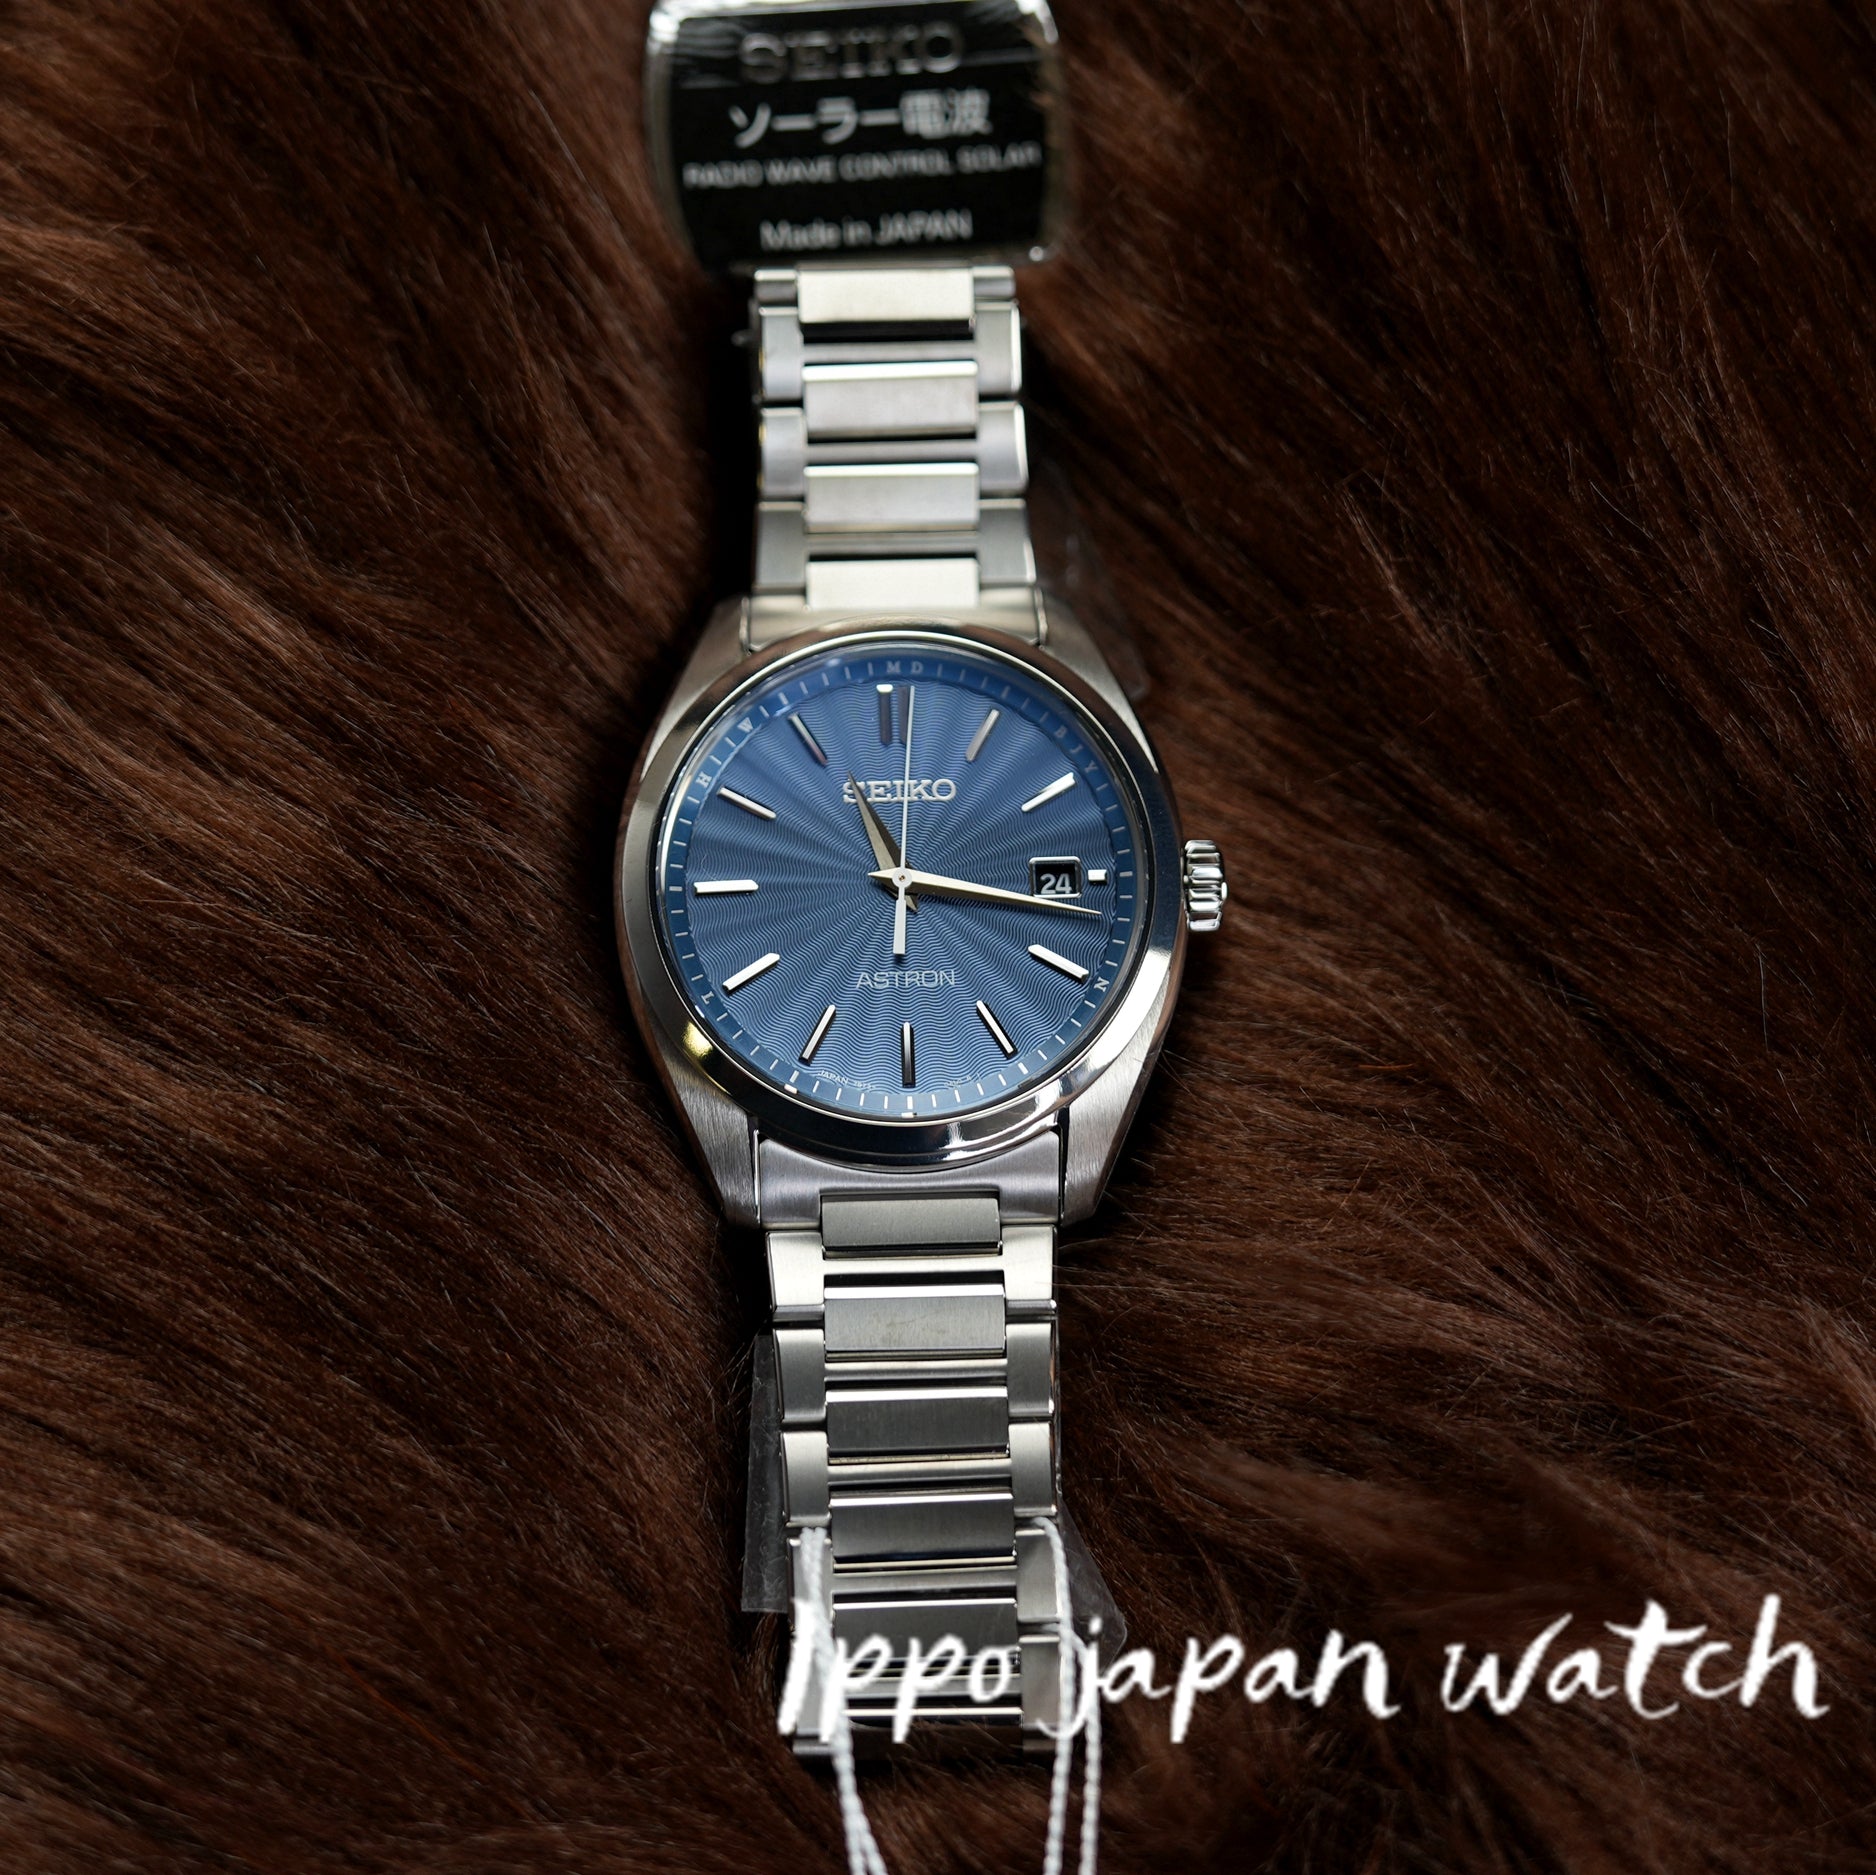 SEIKO Astron SBXY031 Solar Pure titanium watch - IPPO JAPAN WATCH 